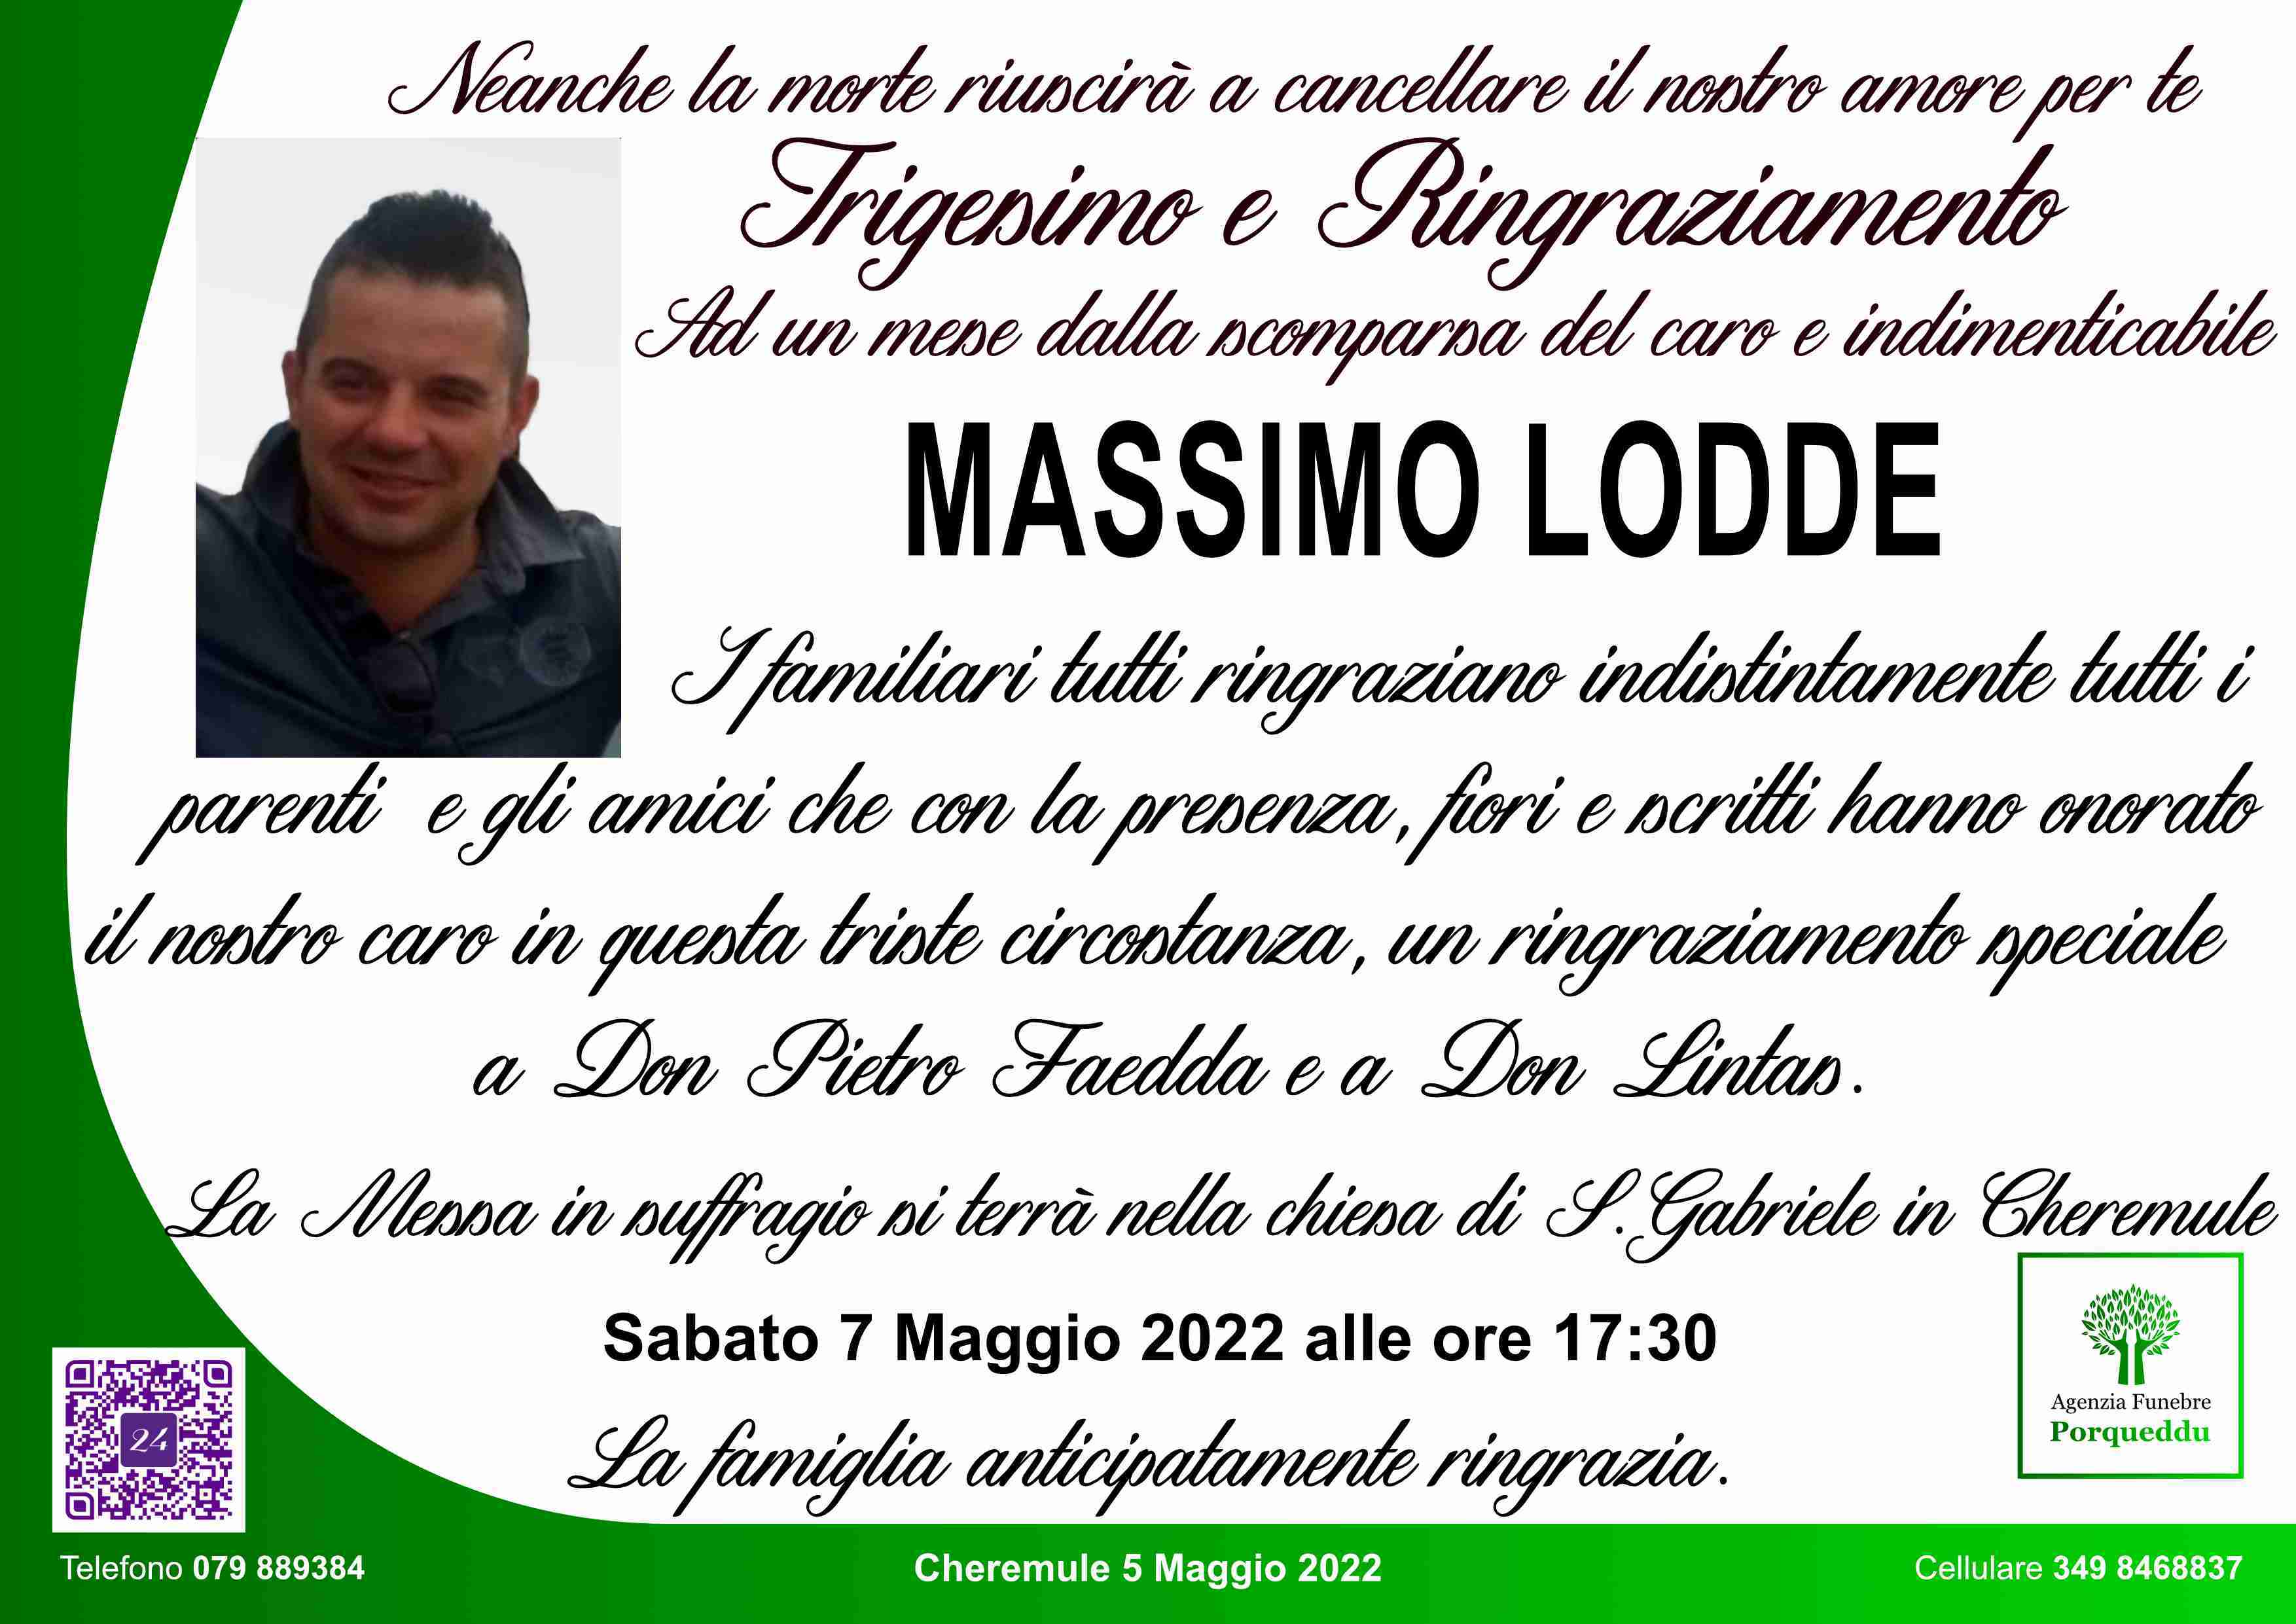 Massimo Lodde